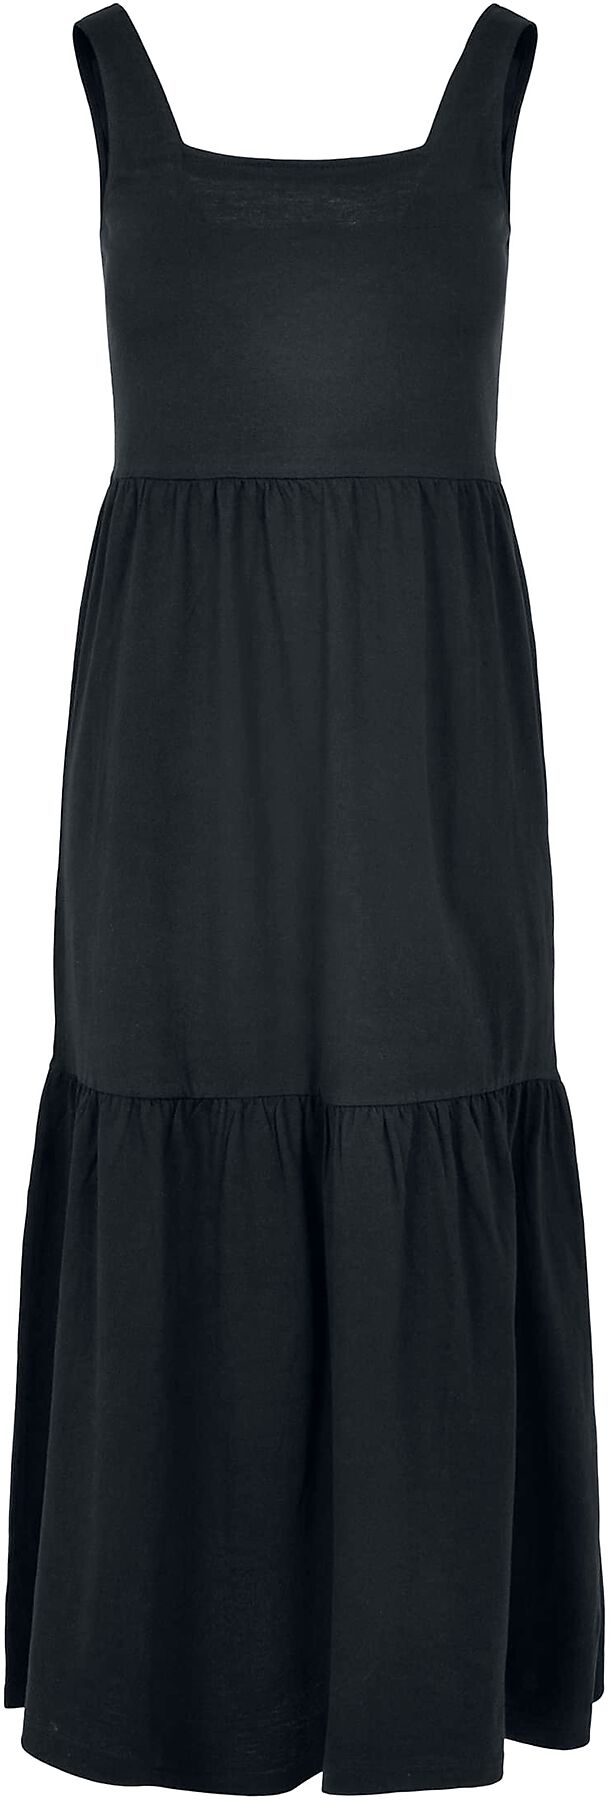 Urban Classics Ladies Long Valance Summer Dress Langes Kleid schwarz in L